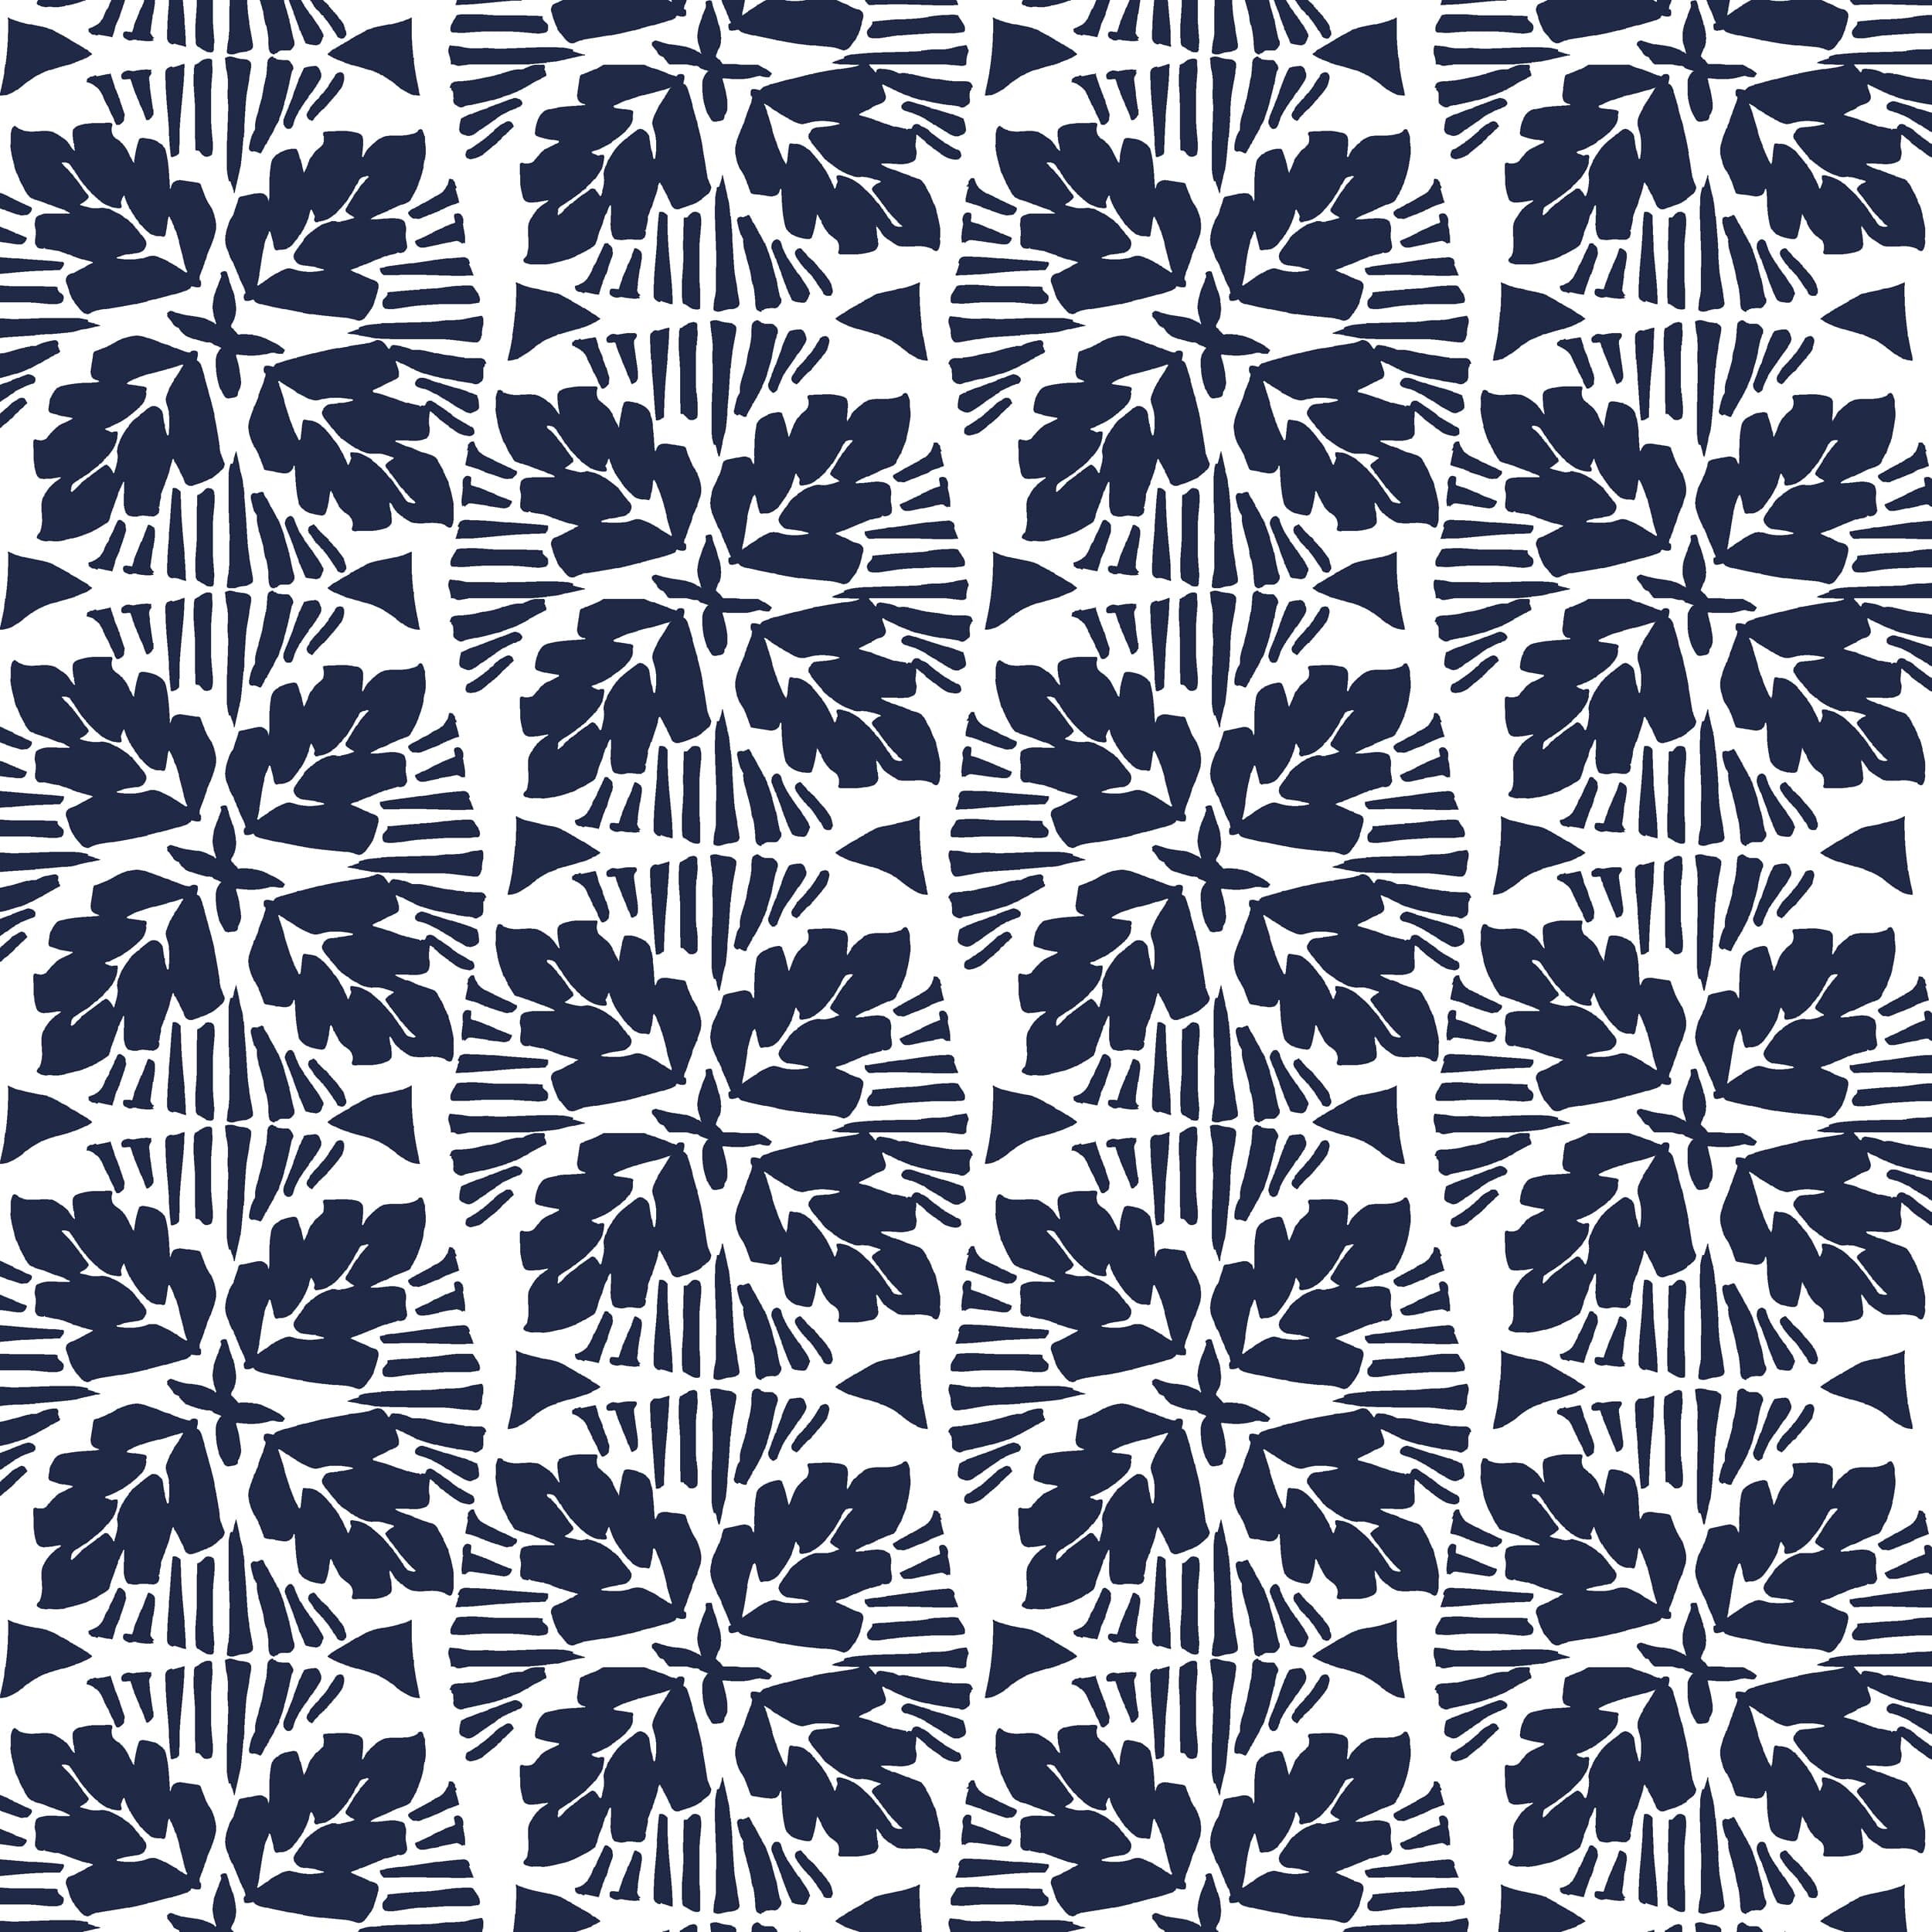 W02vl-1 Keylargo Navy Wallpaper by Stout Fabric